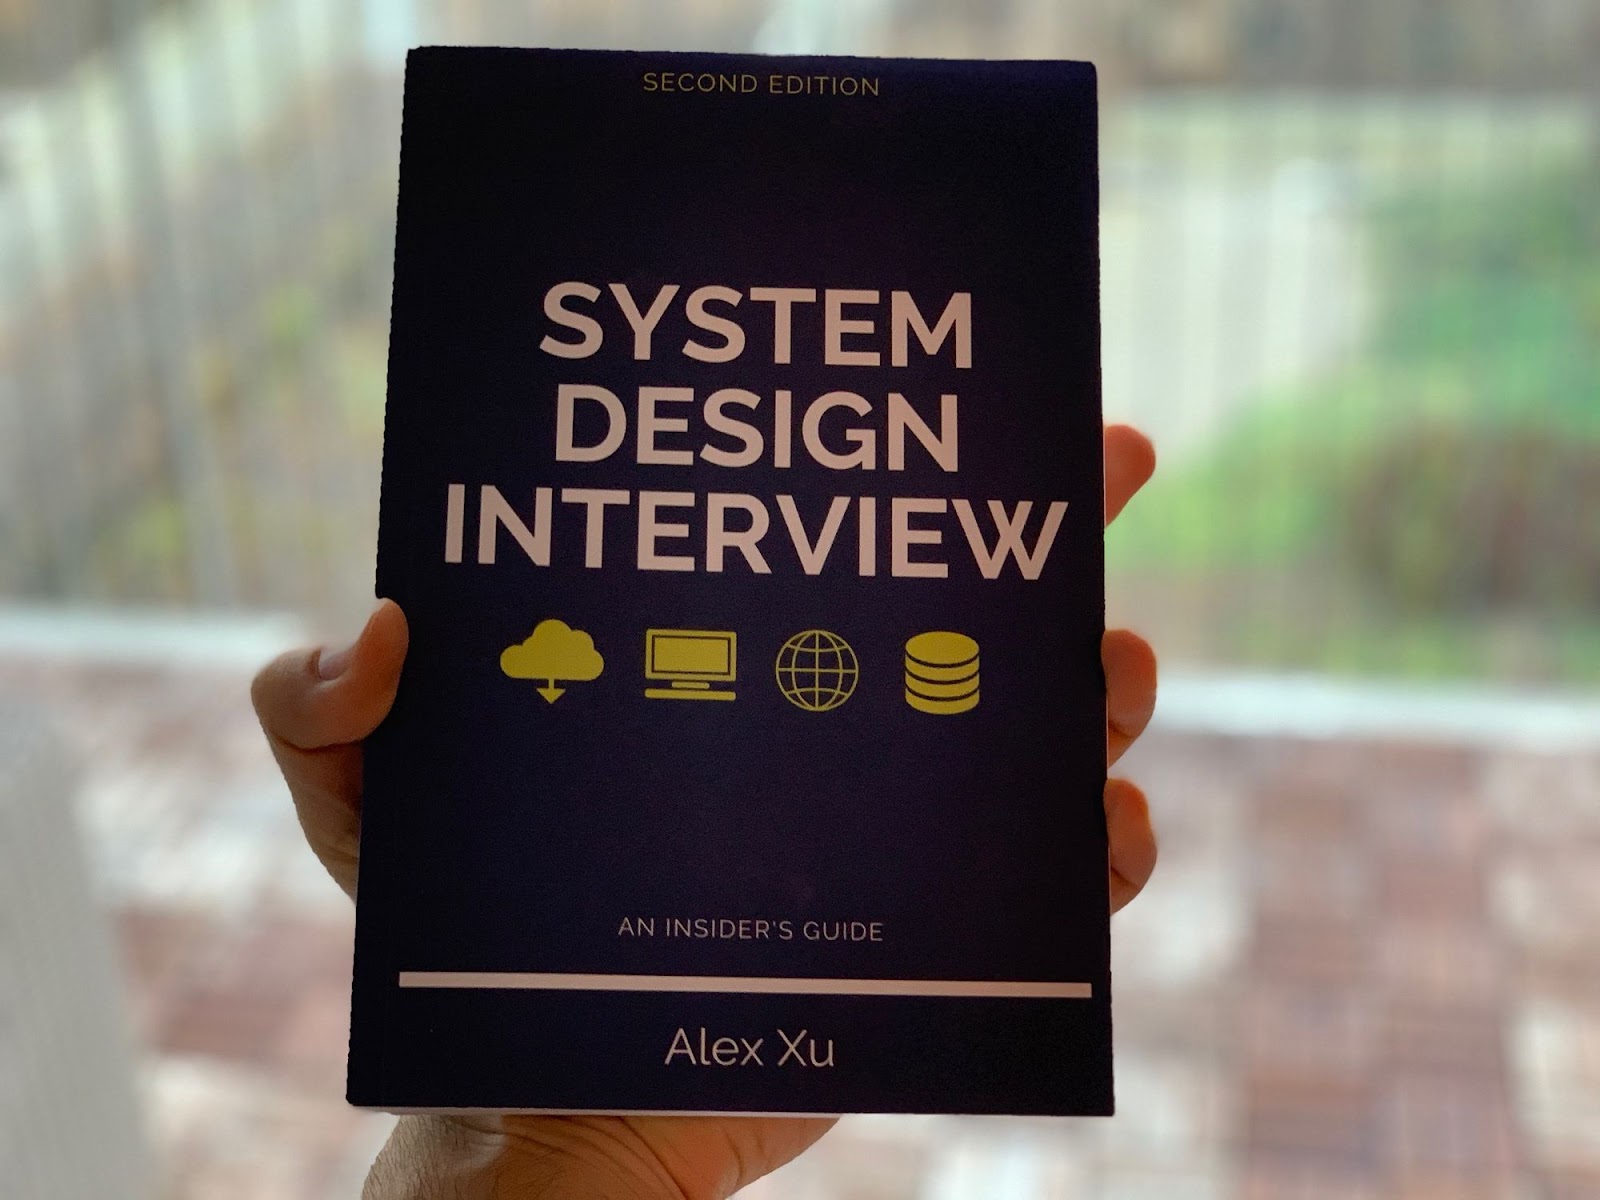 Best System Design Books - System Design Interview: An Insider’s Guide By Alex Xu